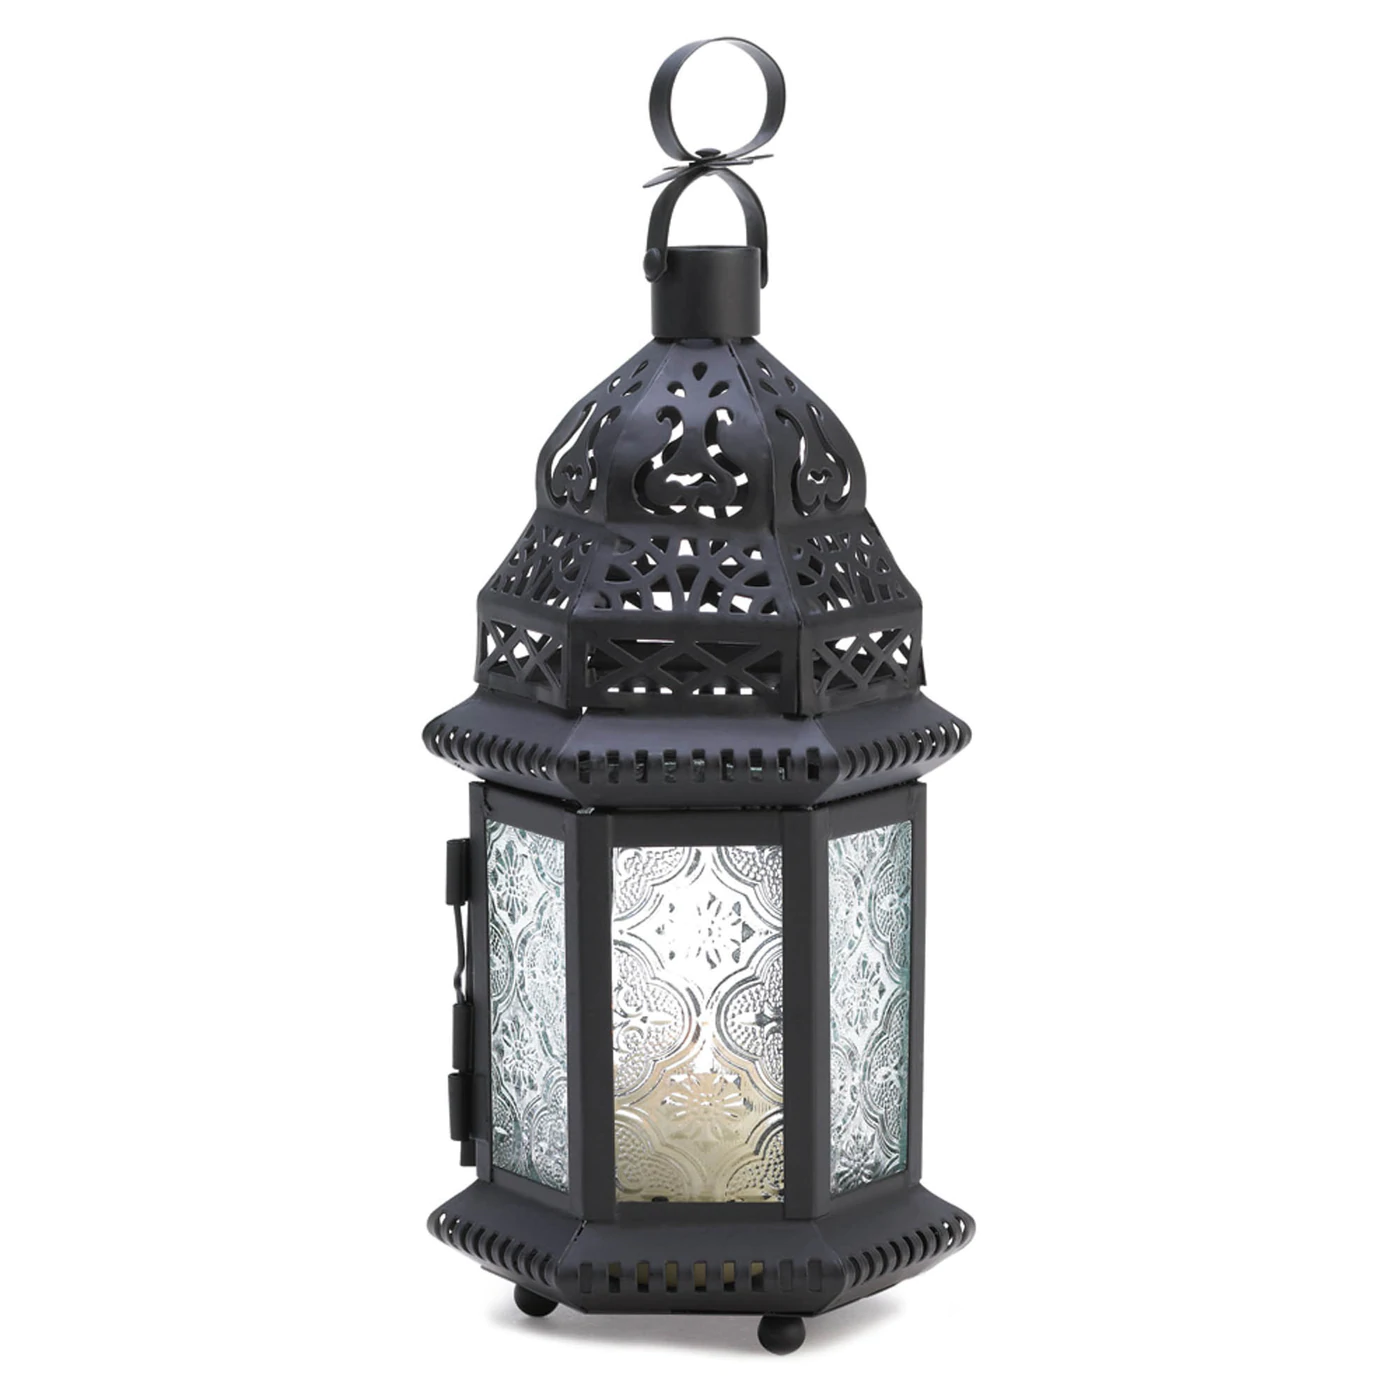 10 - Clear Glass Moroccan Lantern - $138.00